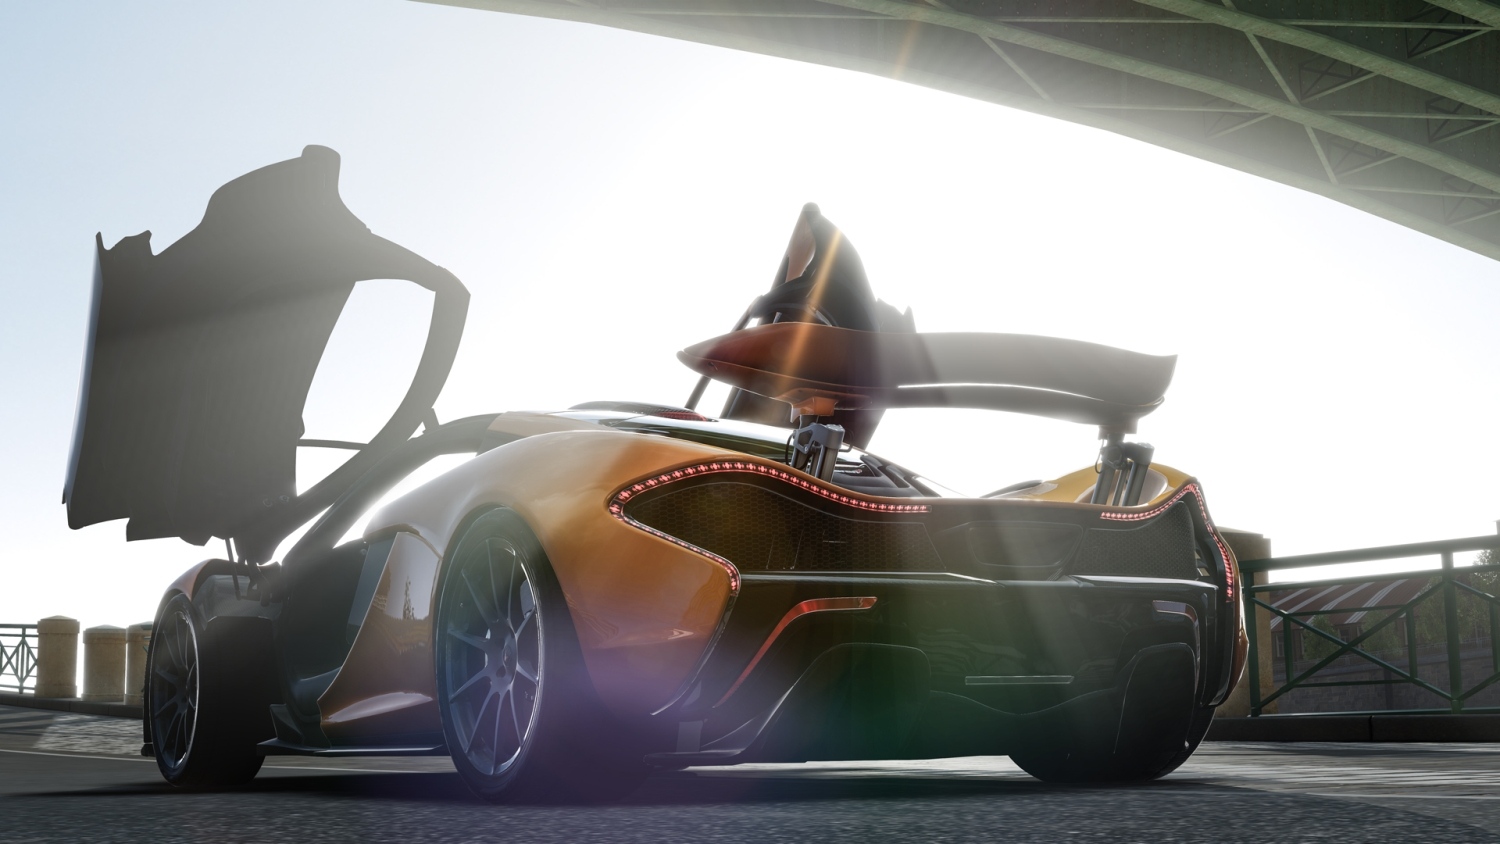 Forza motorsport 5 pc download free full version pc